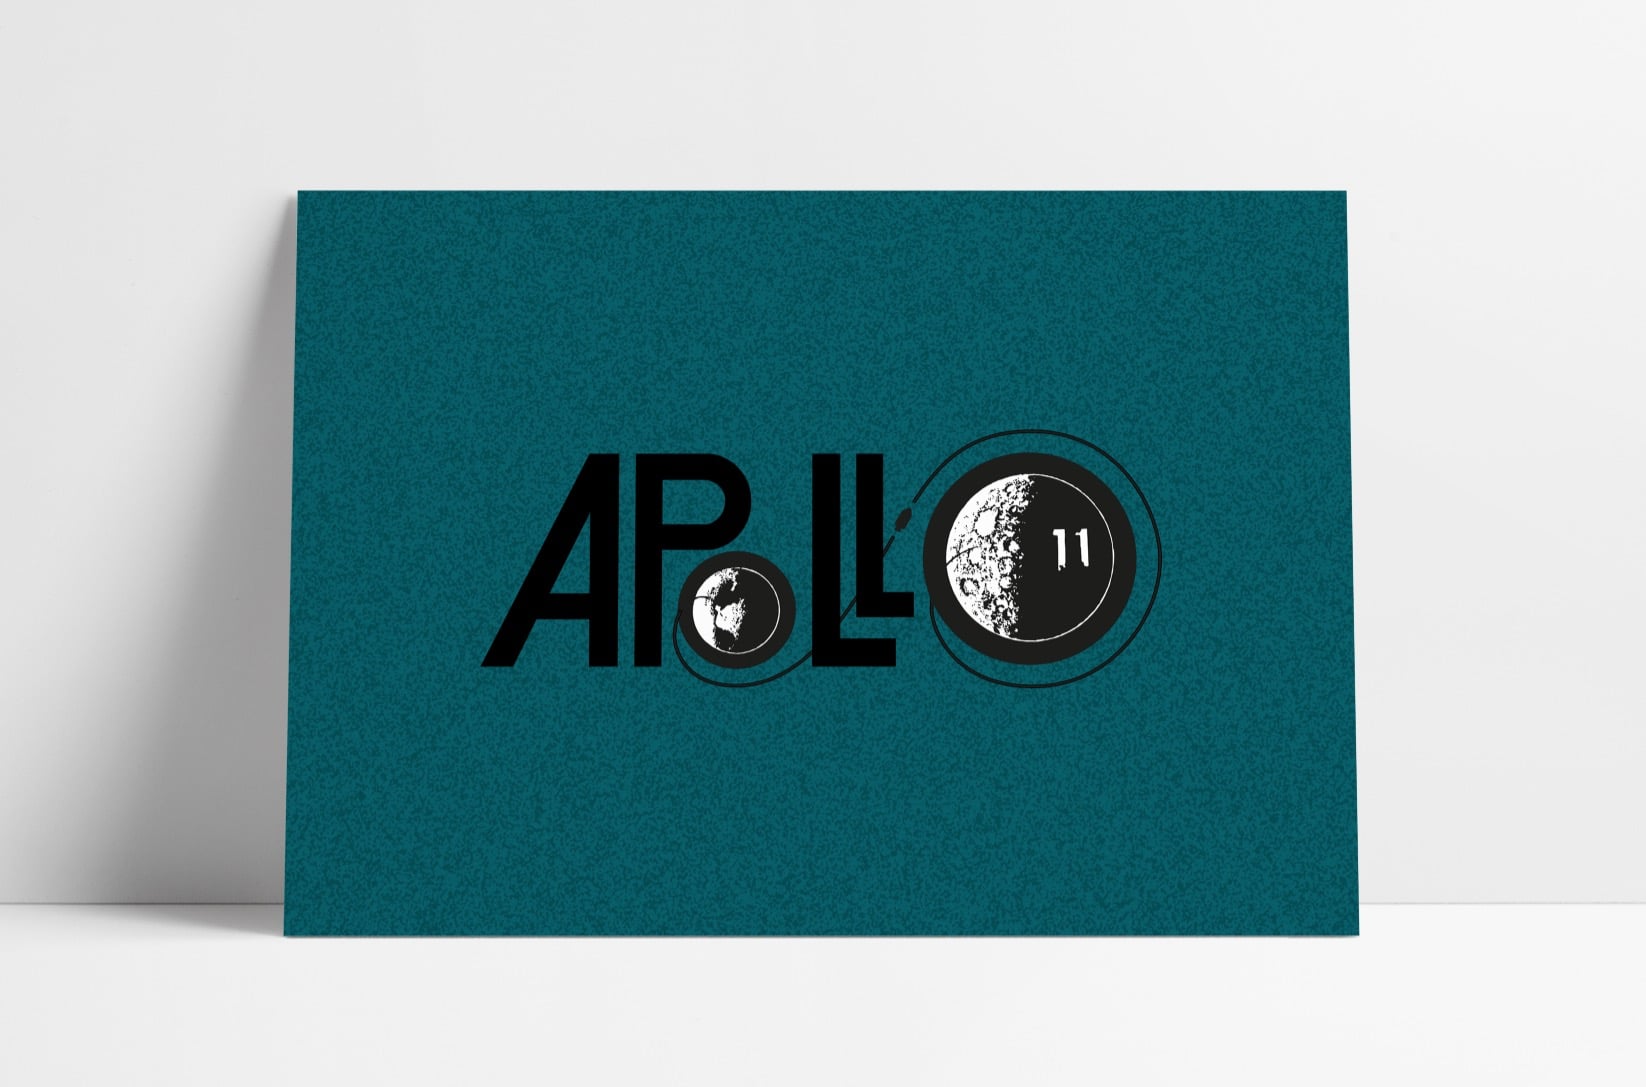 Apollo 11 Bell Aerosystems Press Kit Logo recreated by The Logo Smith